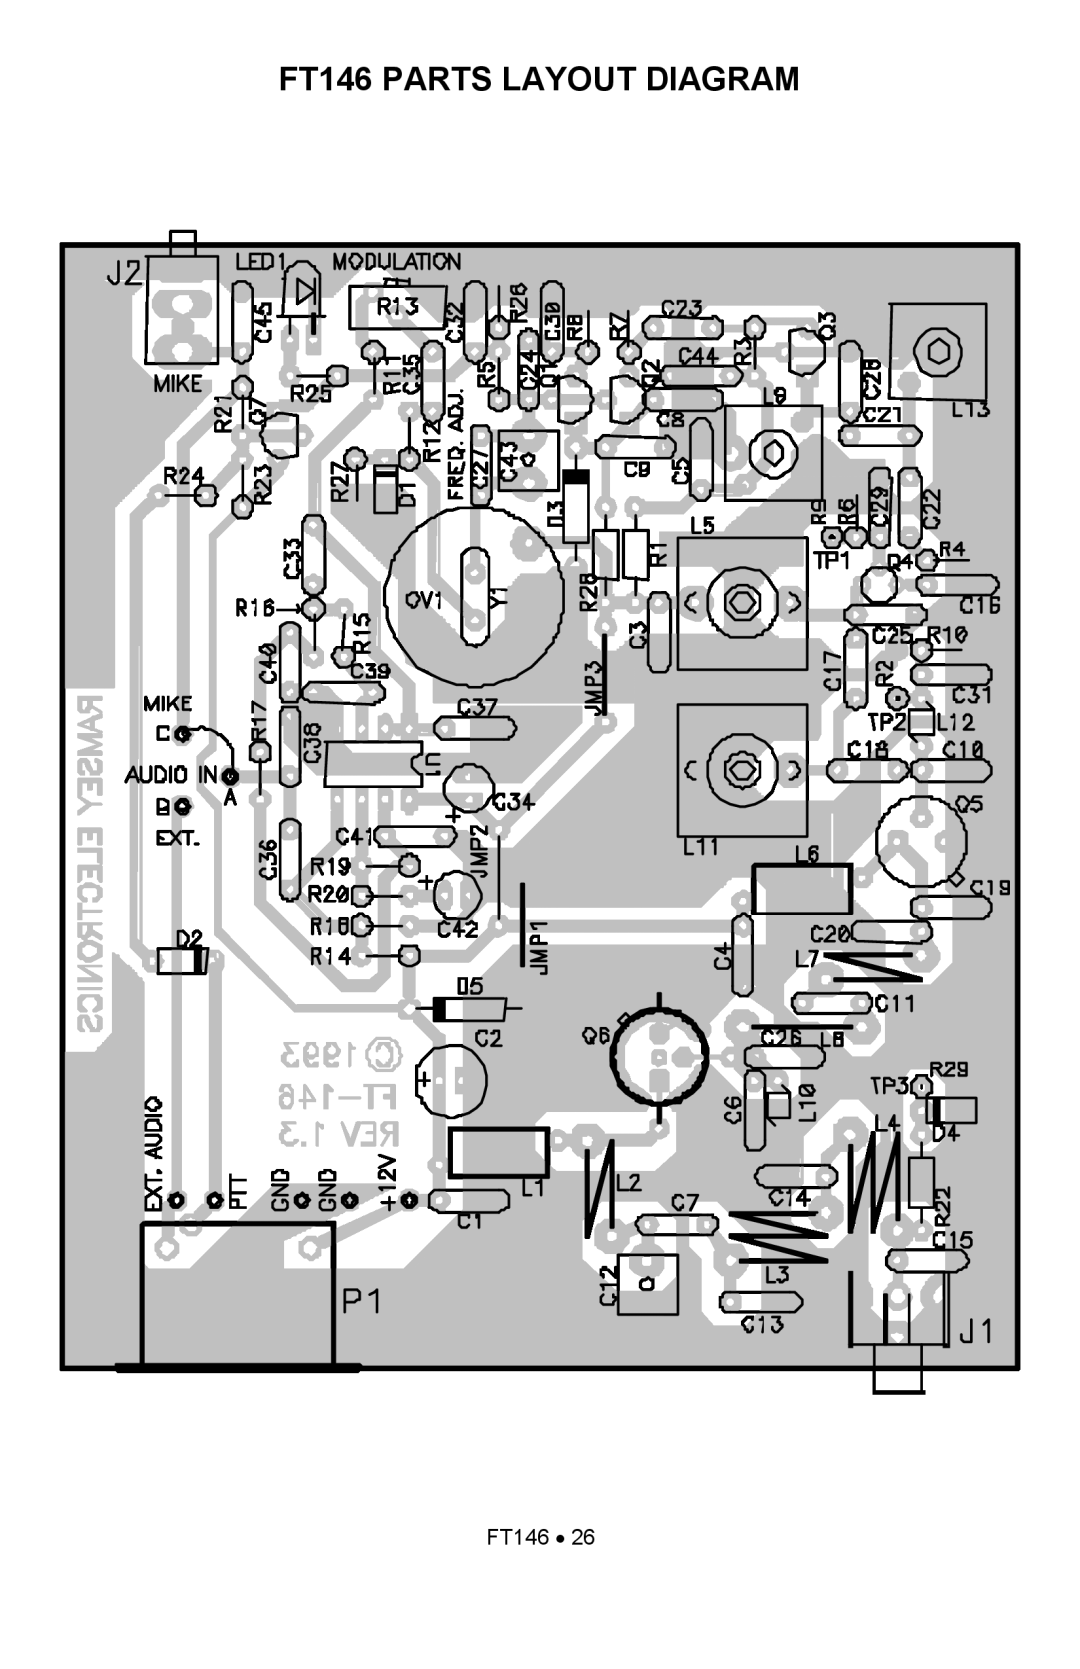 Ramsey Electronics manual FT146 PARTS LAYOUT DIAGRAM 